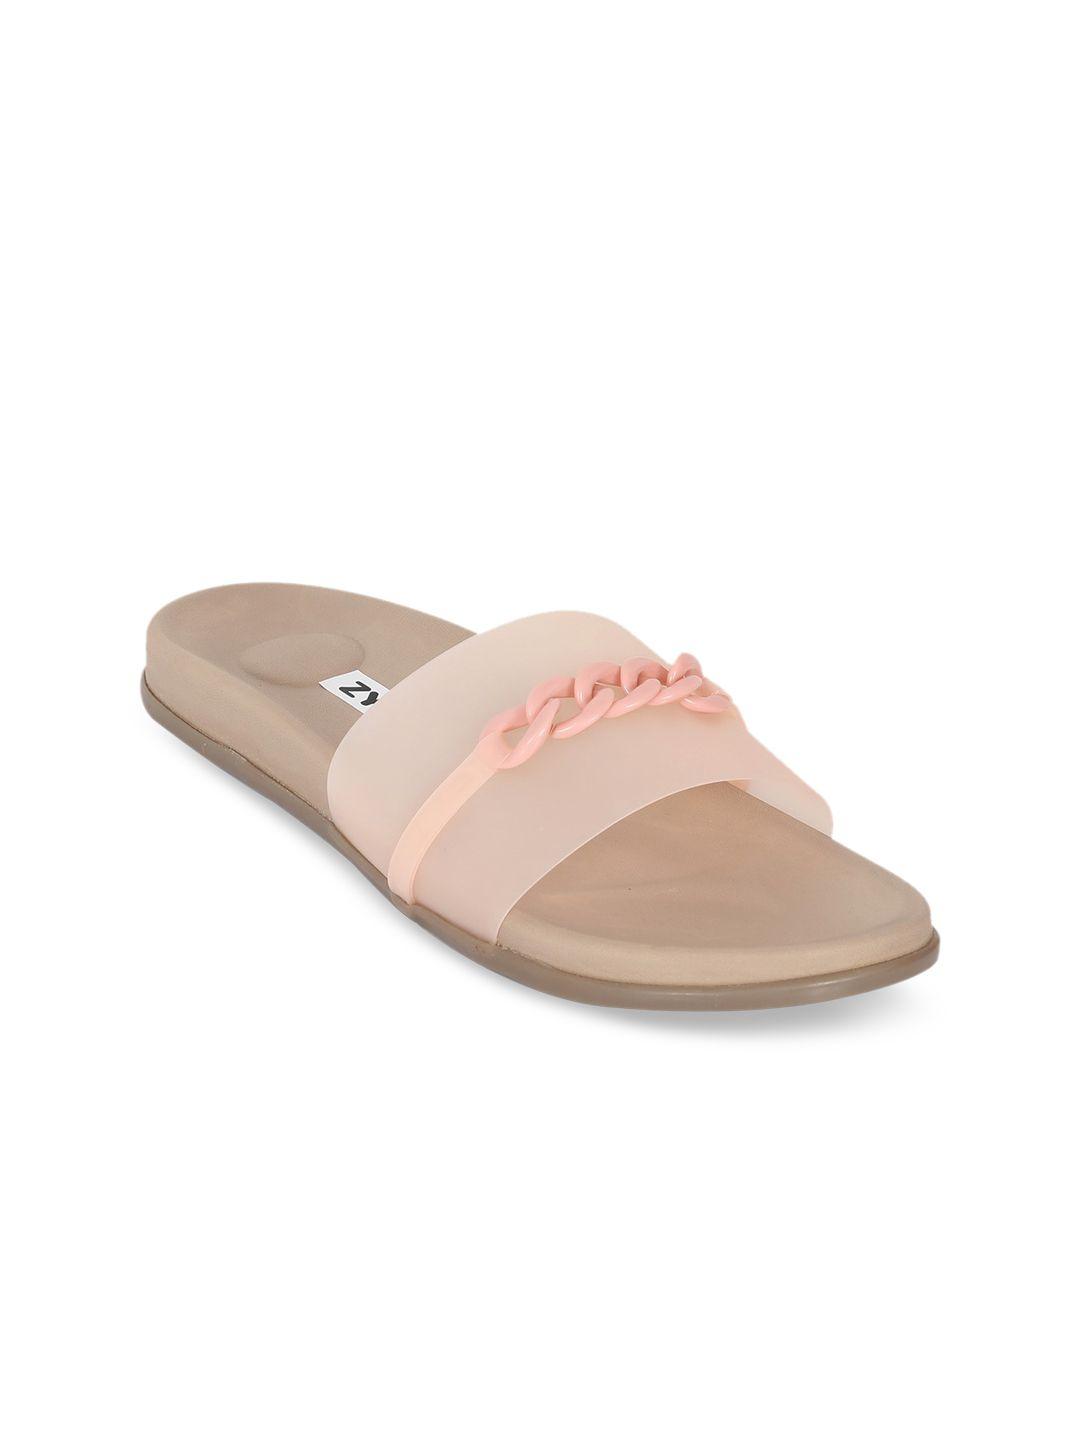 zyla women peach-coloured printed open toe flats